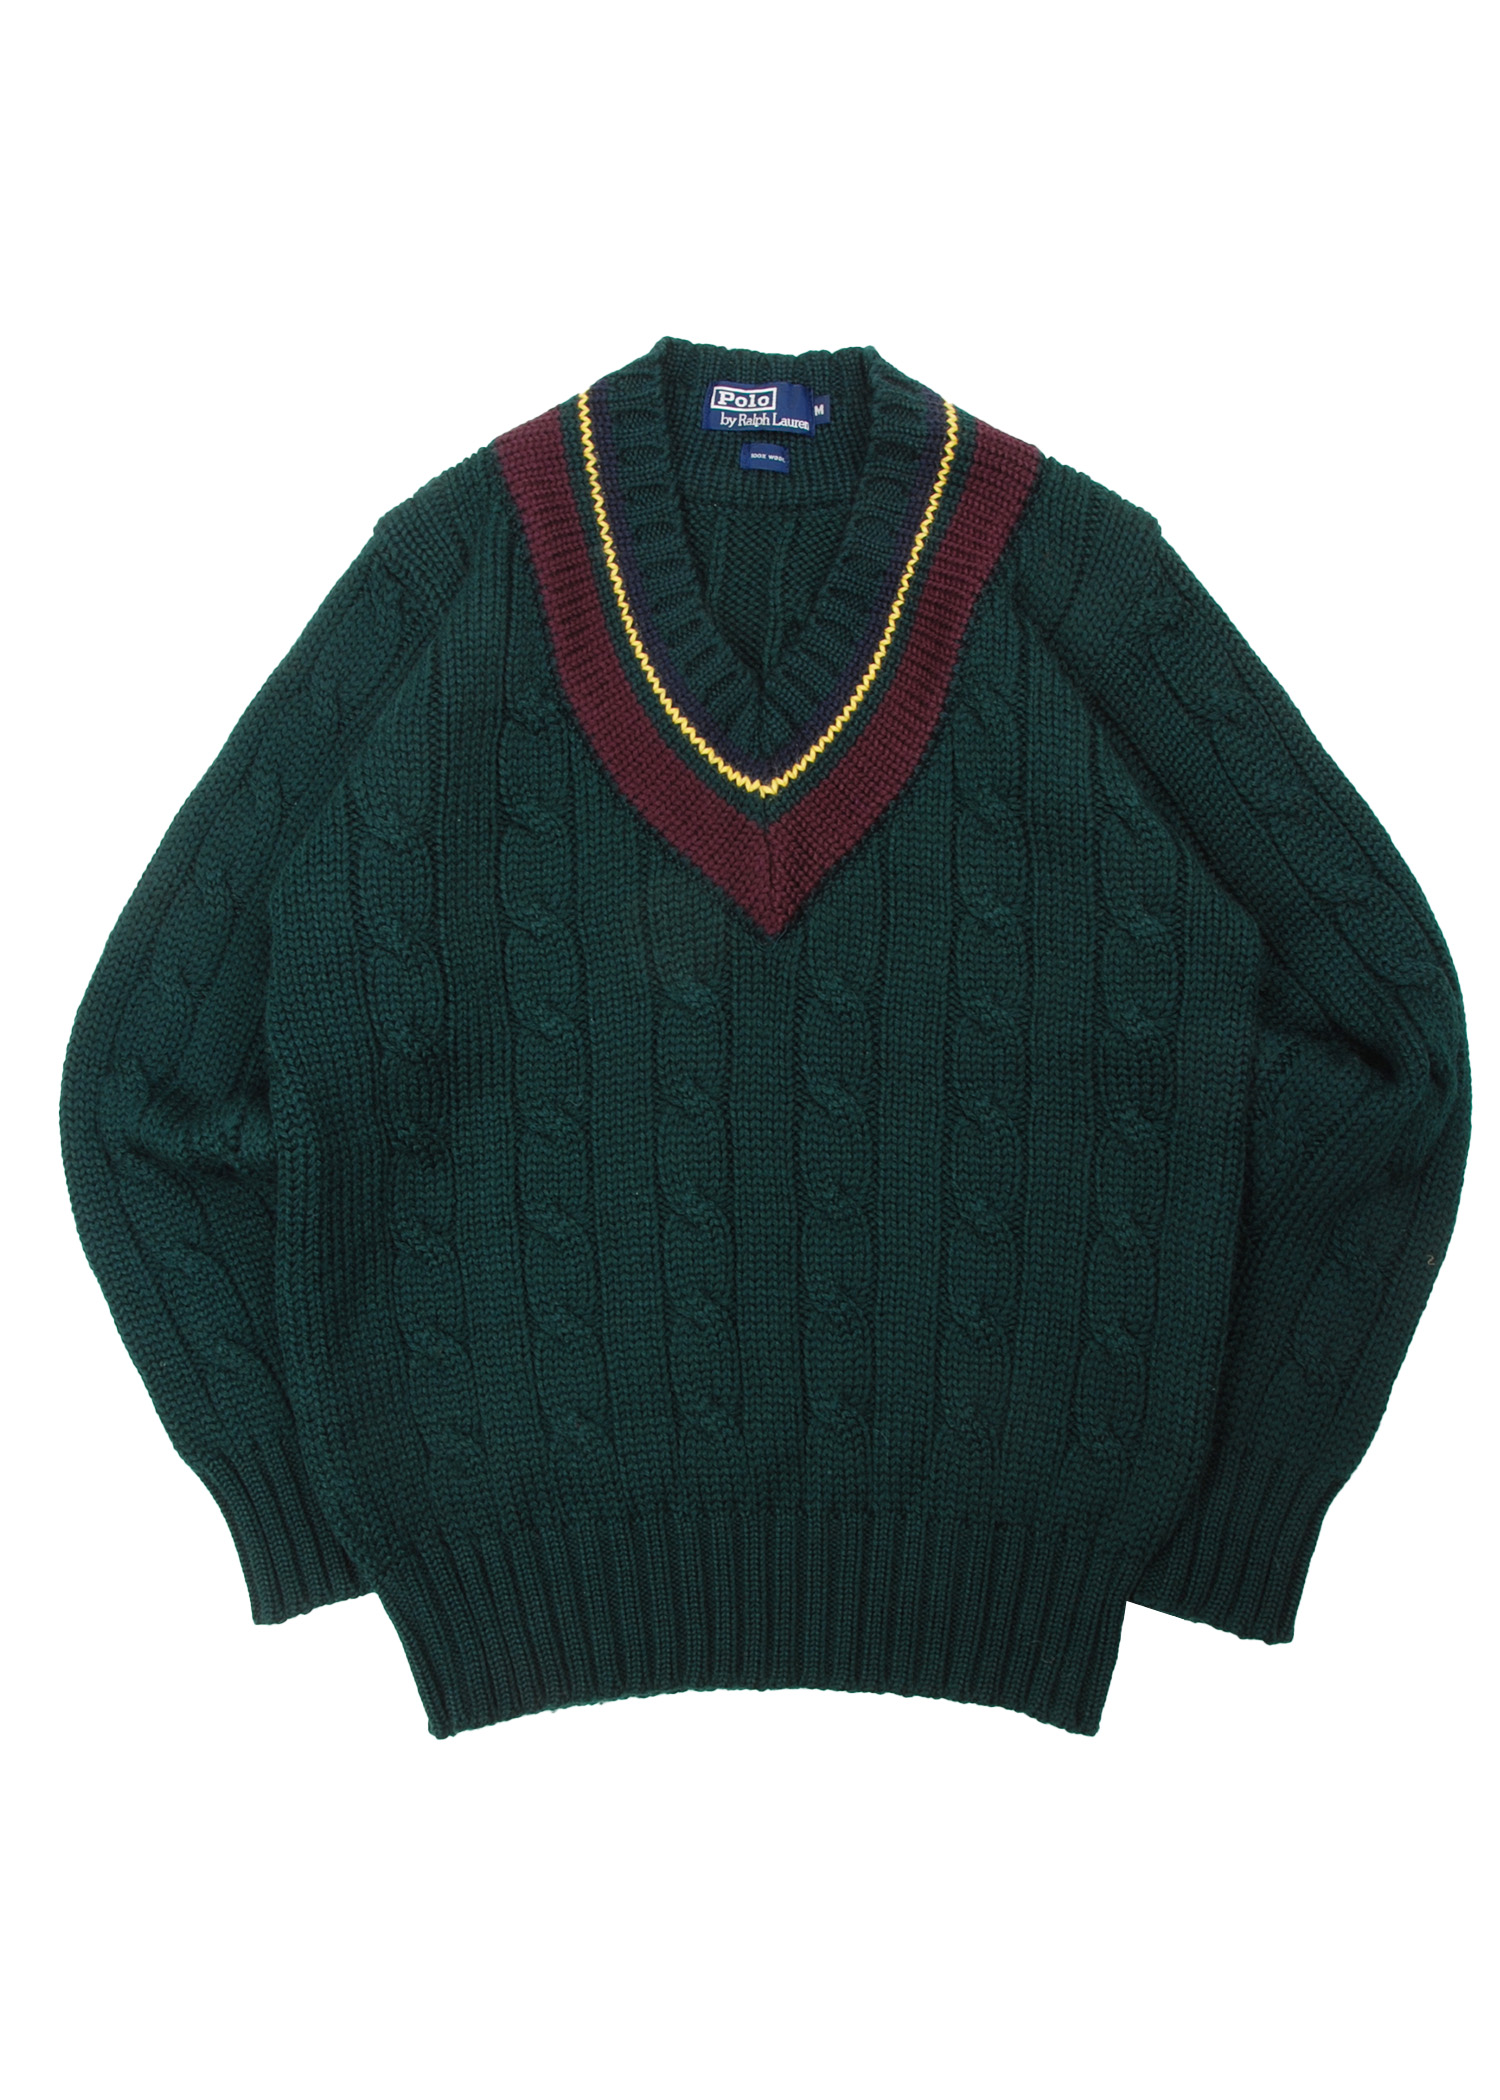 Polo by Ralph Lauren cricket knit